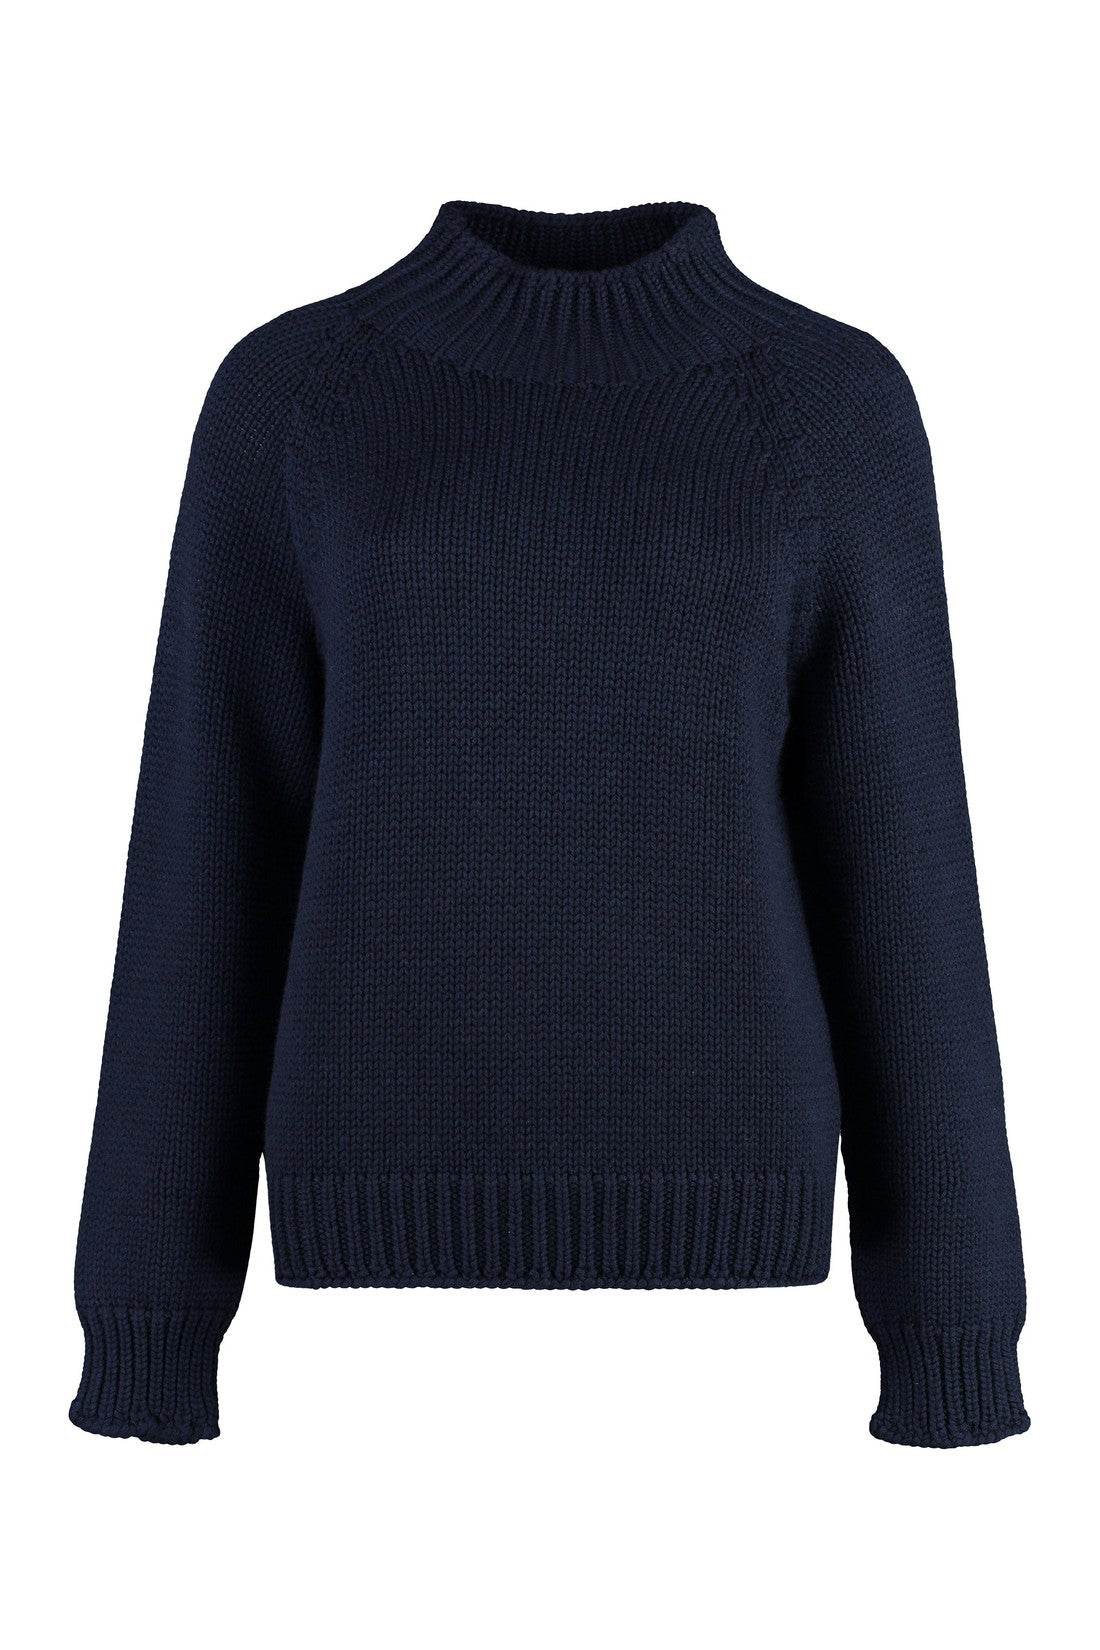 Fabiana Filippi-OUTLET-SALE-Wool turtleneck sweater-ARCHIVIST